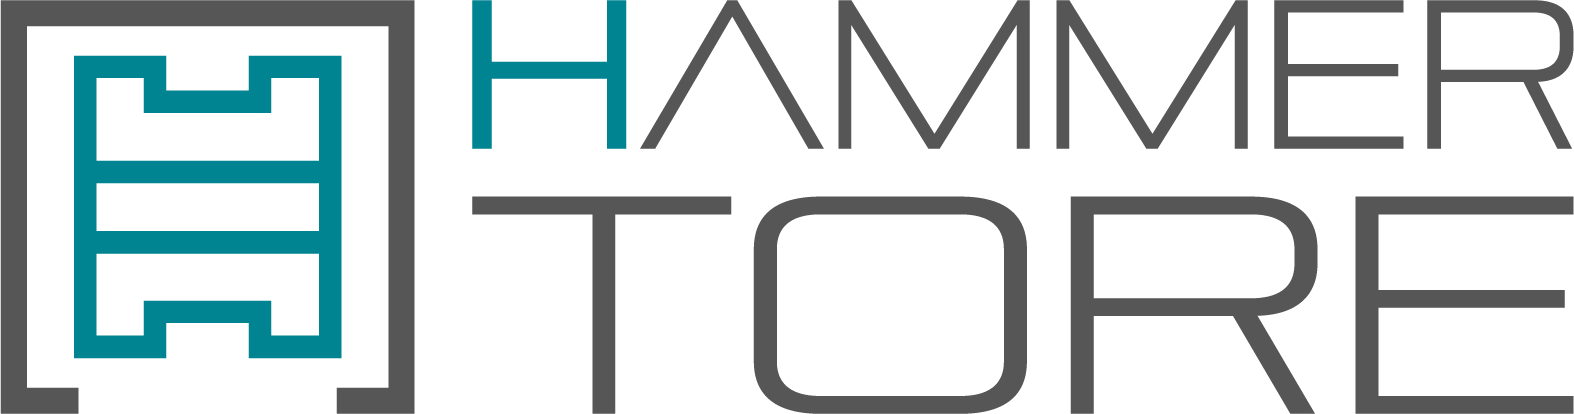 Logo der Firma Hammertore